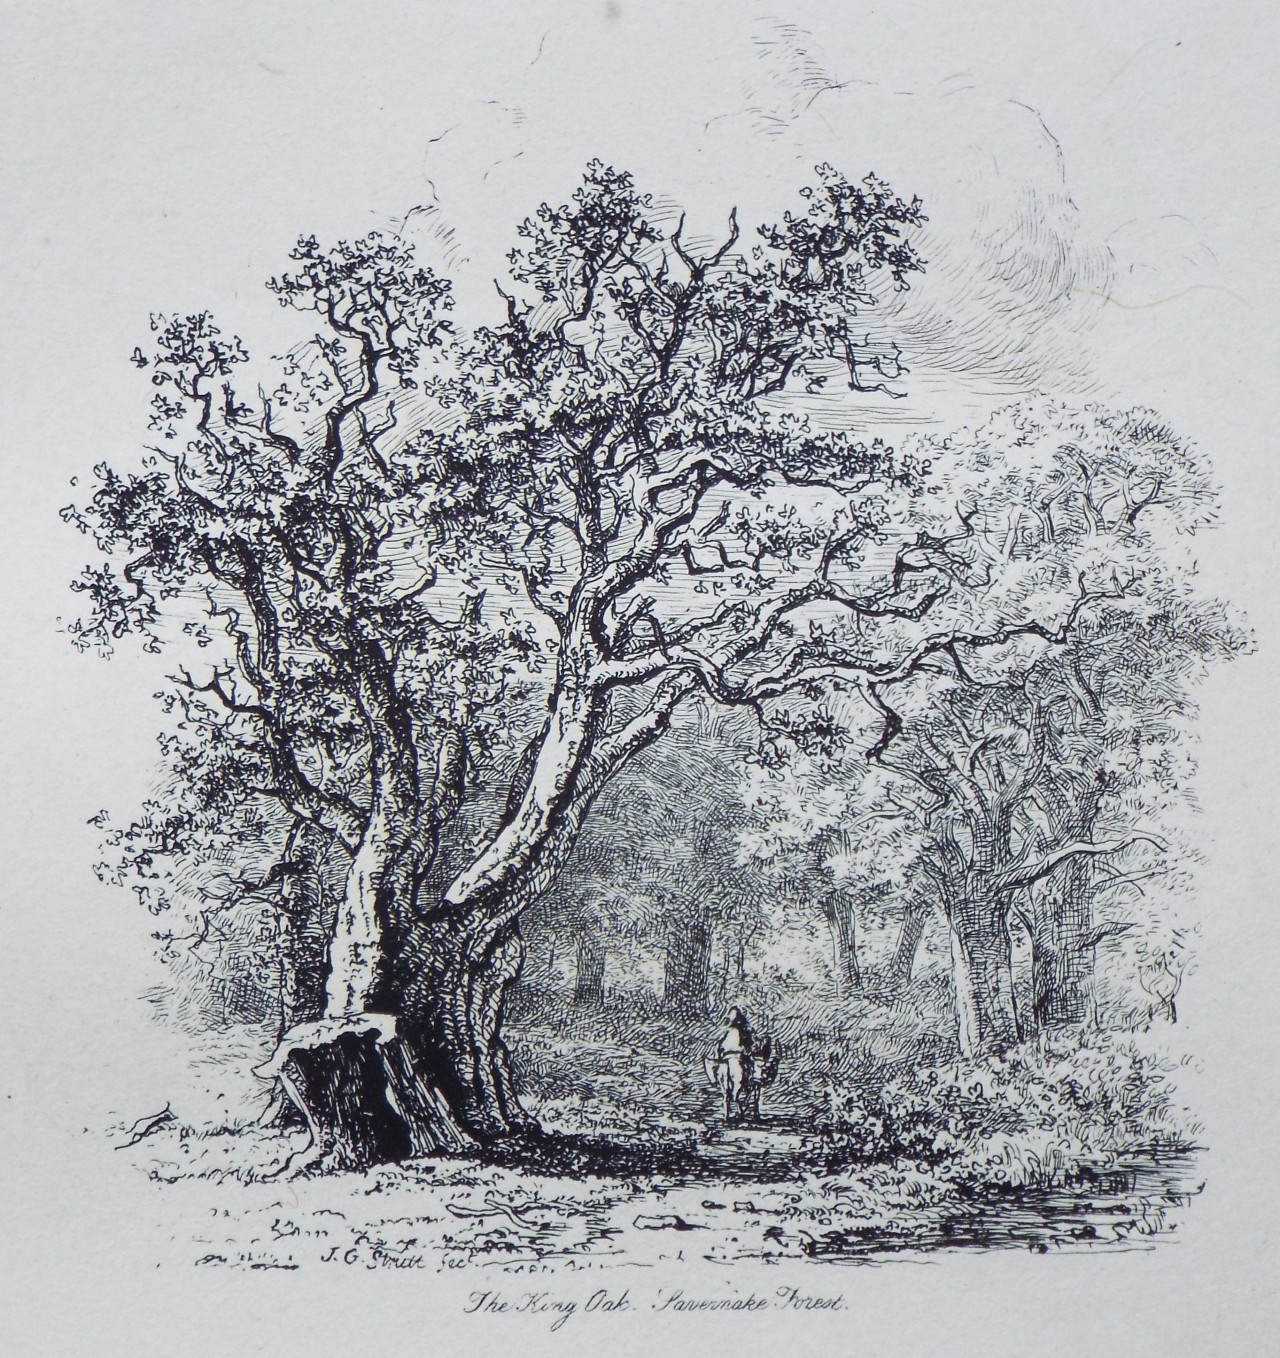 Etching - The King Oak, Savernake Forest. - Strutt